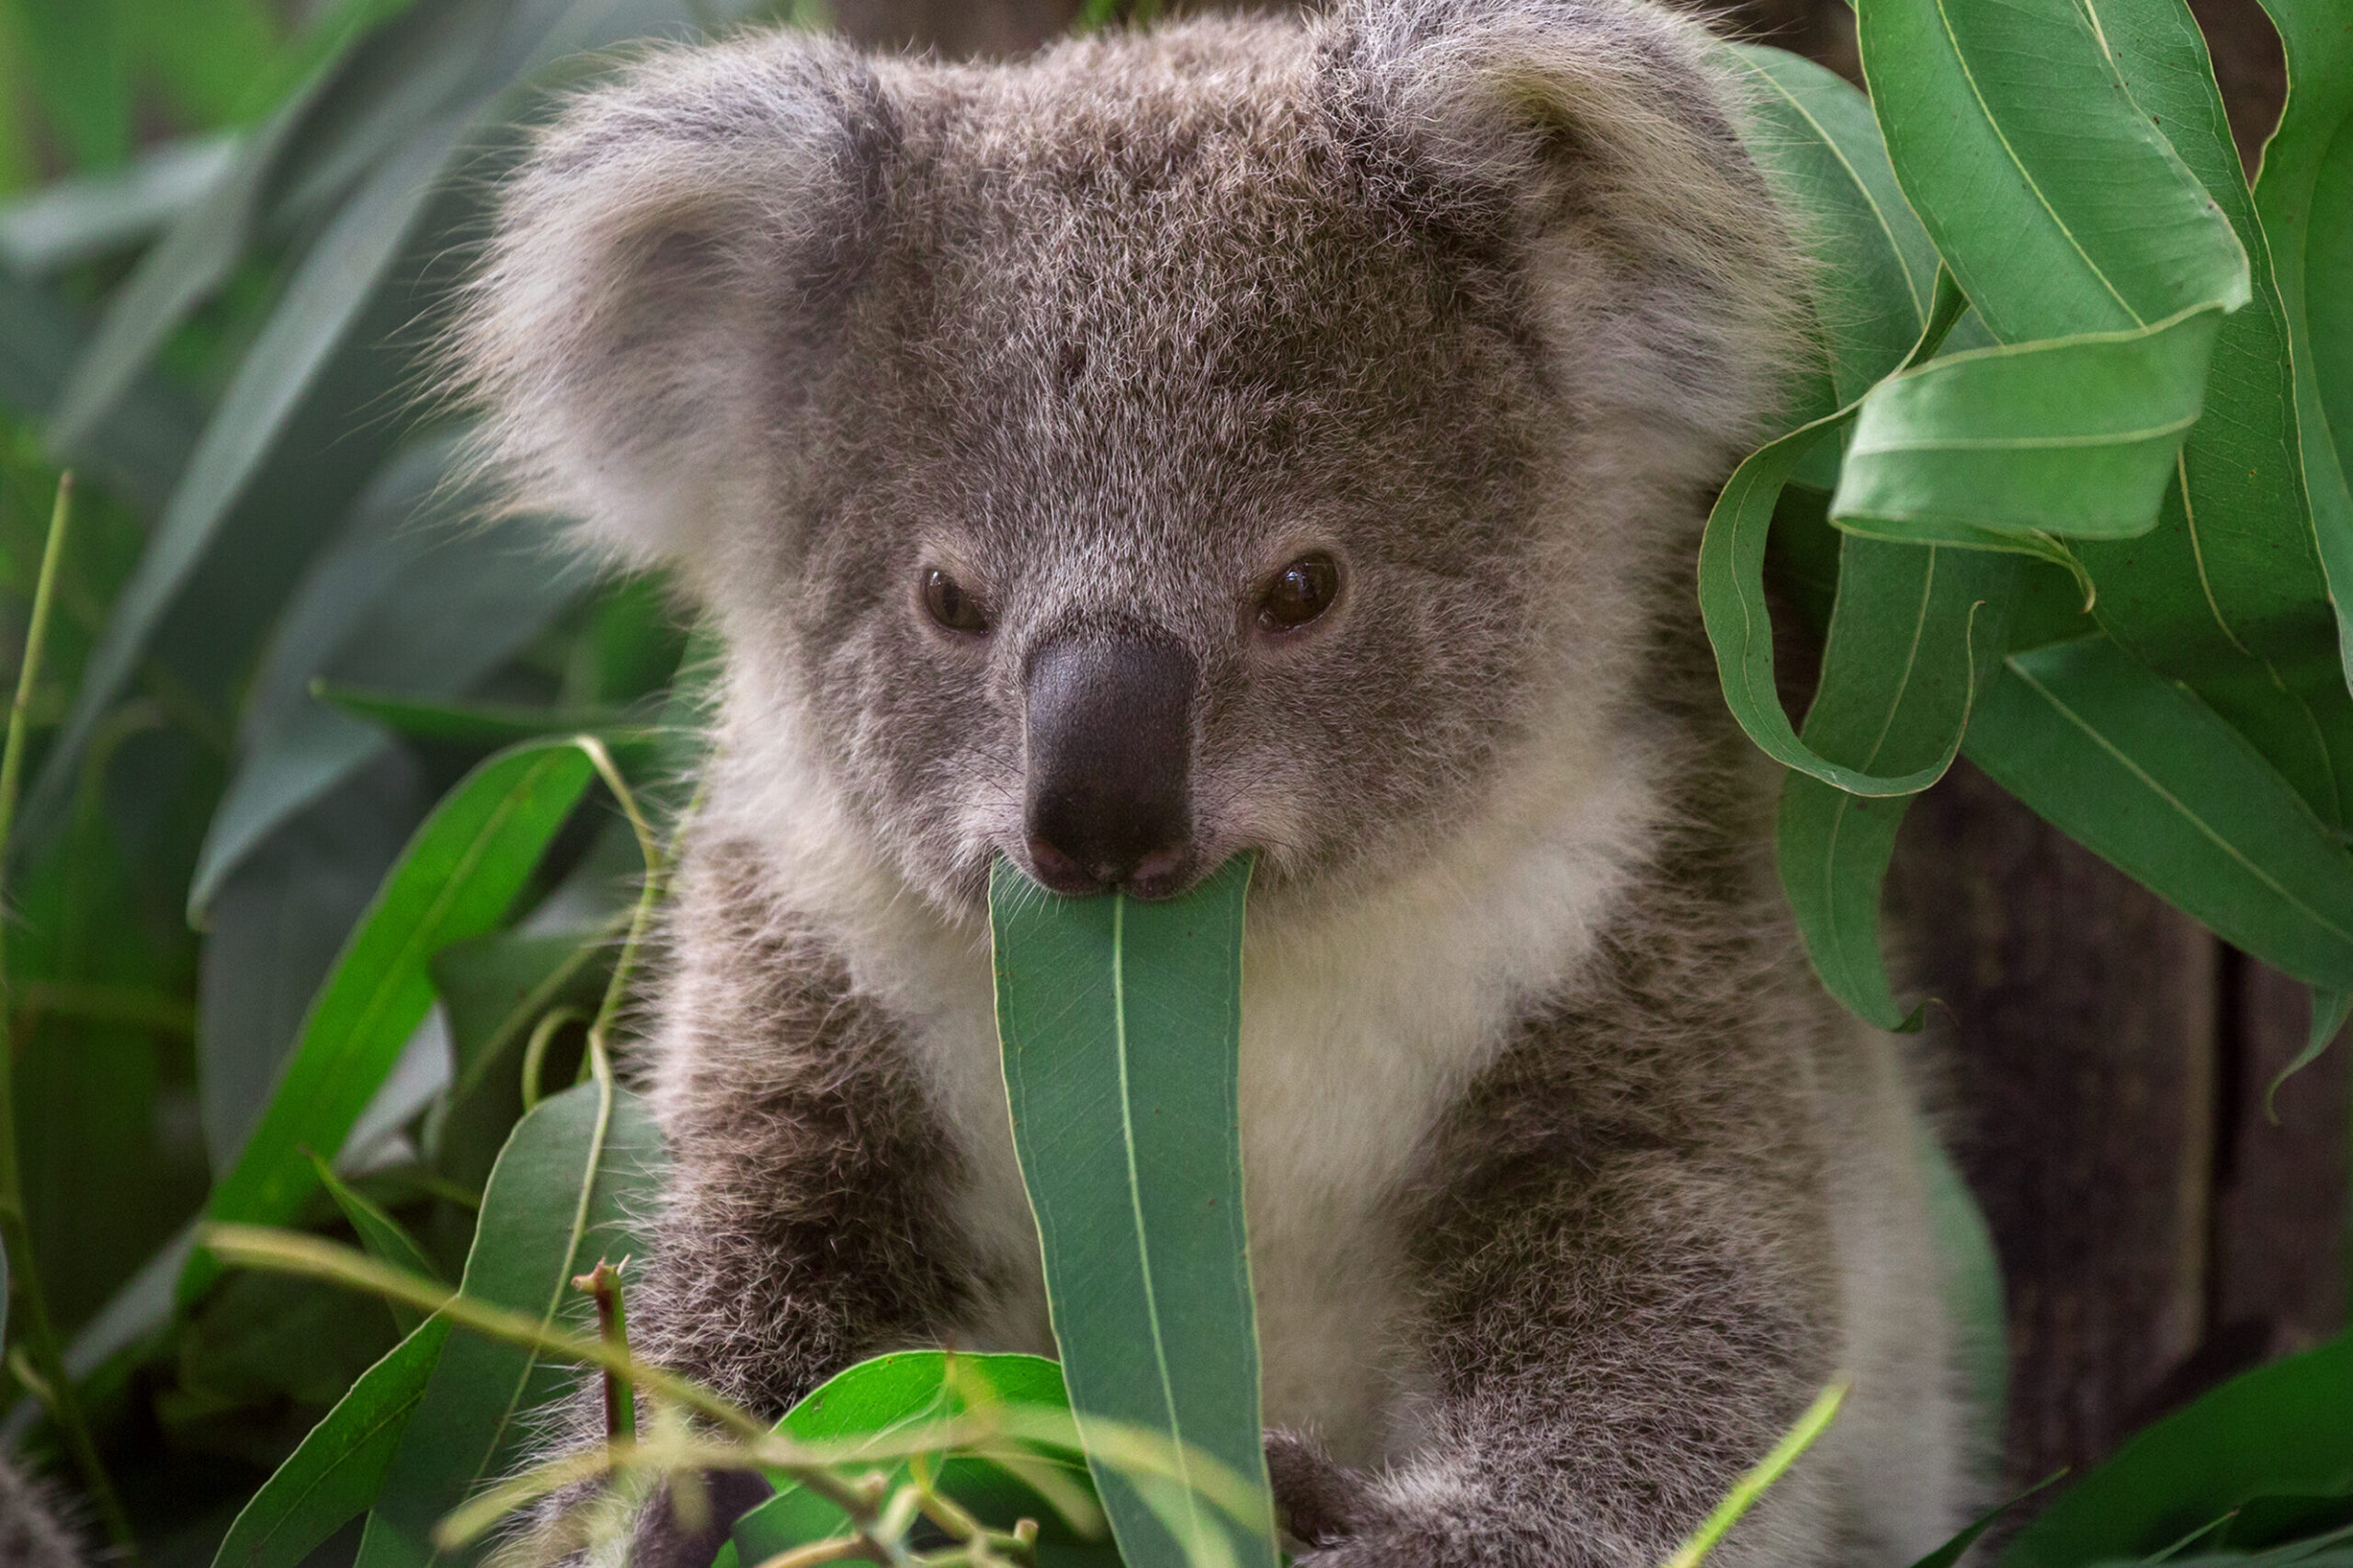 Drop Bears feared extinct due to Australian bushfires